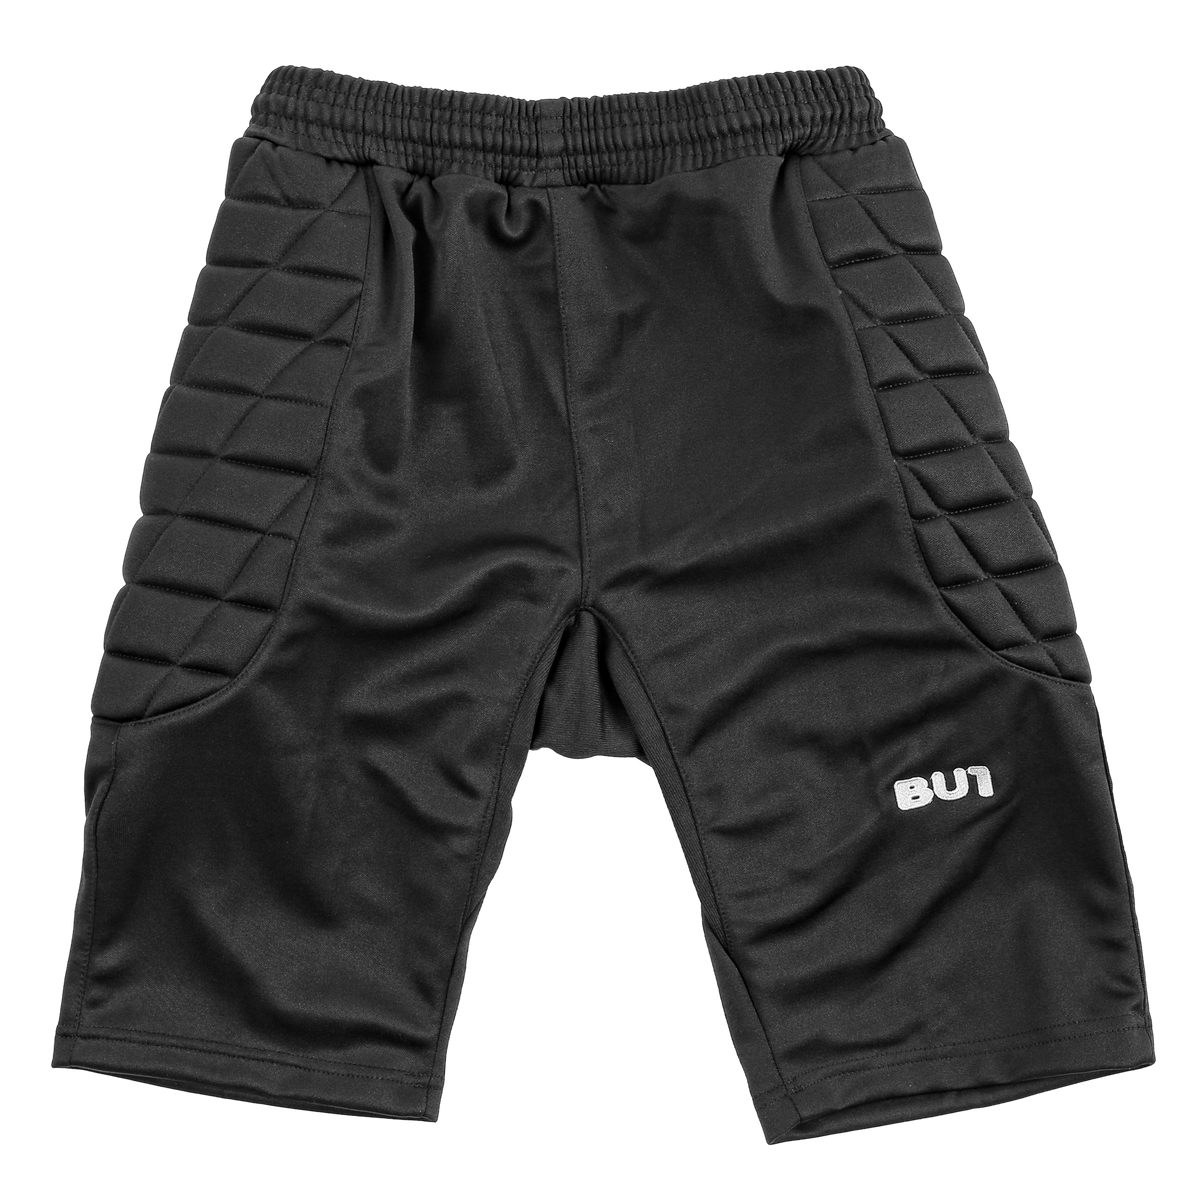 BU1 goalkeeper shorts